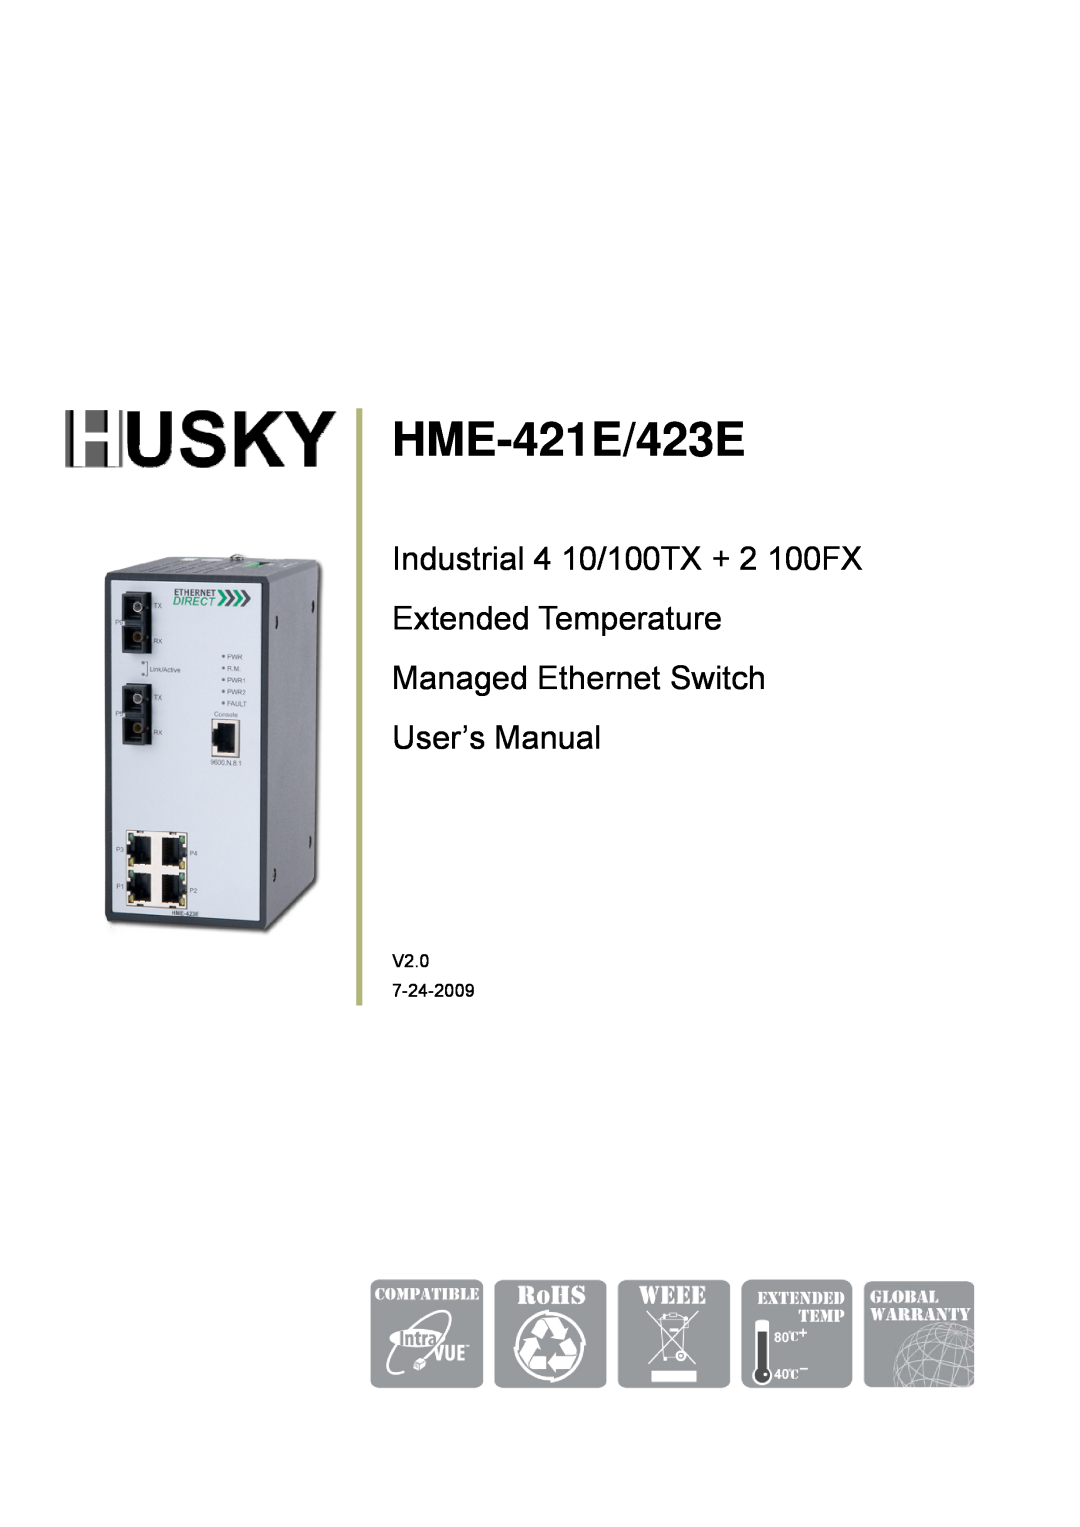 Husky HME-423E user manual HME-421E/423E, Industrial 4 10/100TX + 2 100FX Extended Temperature 